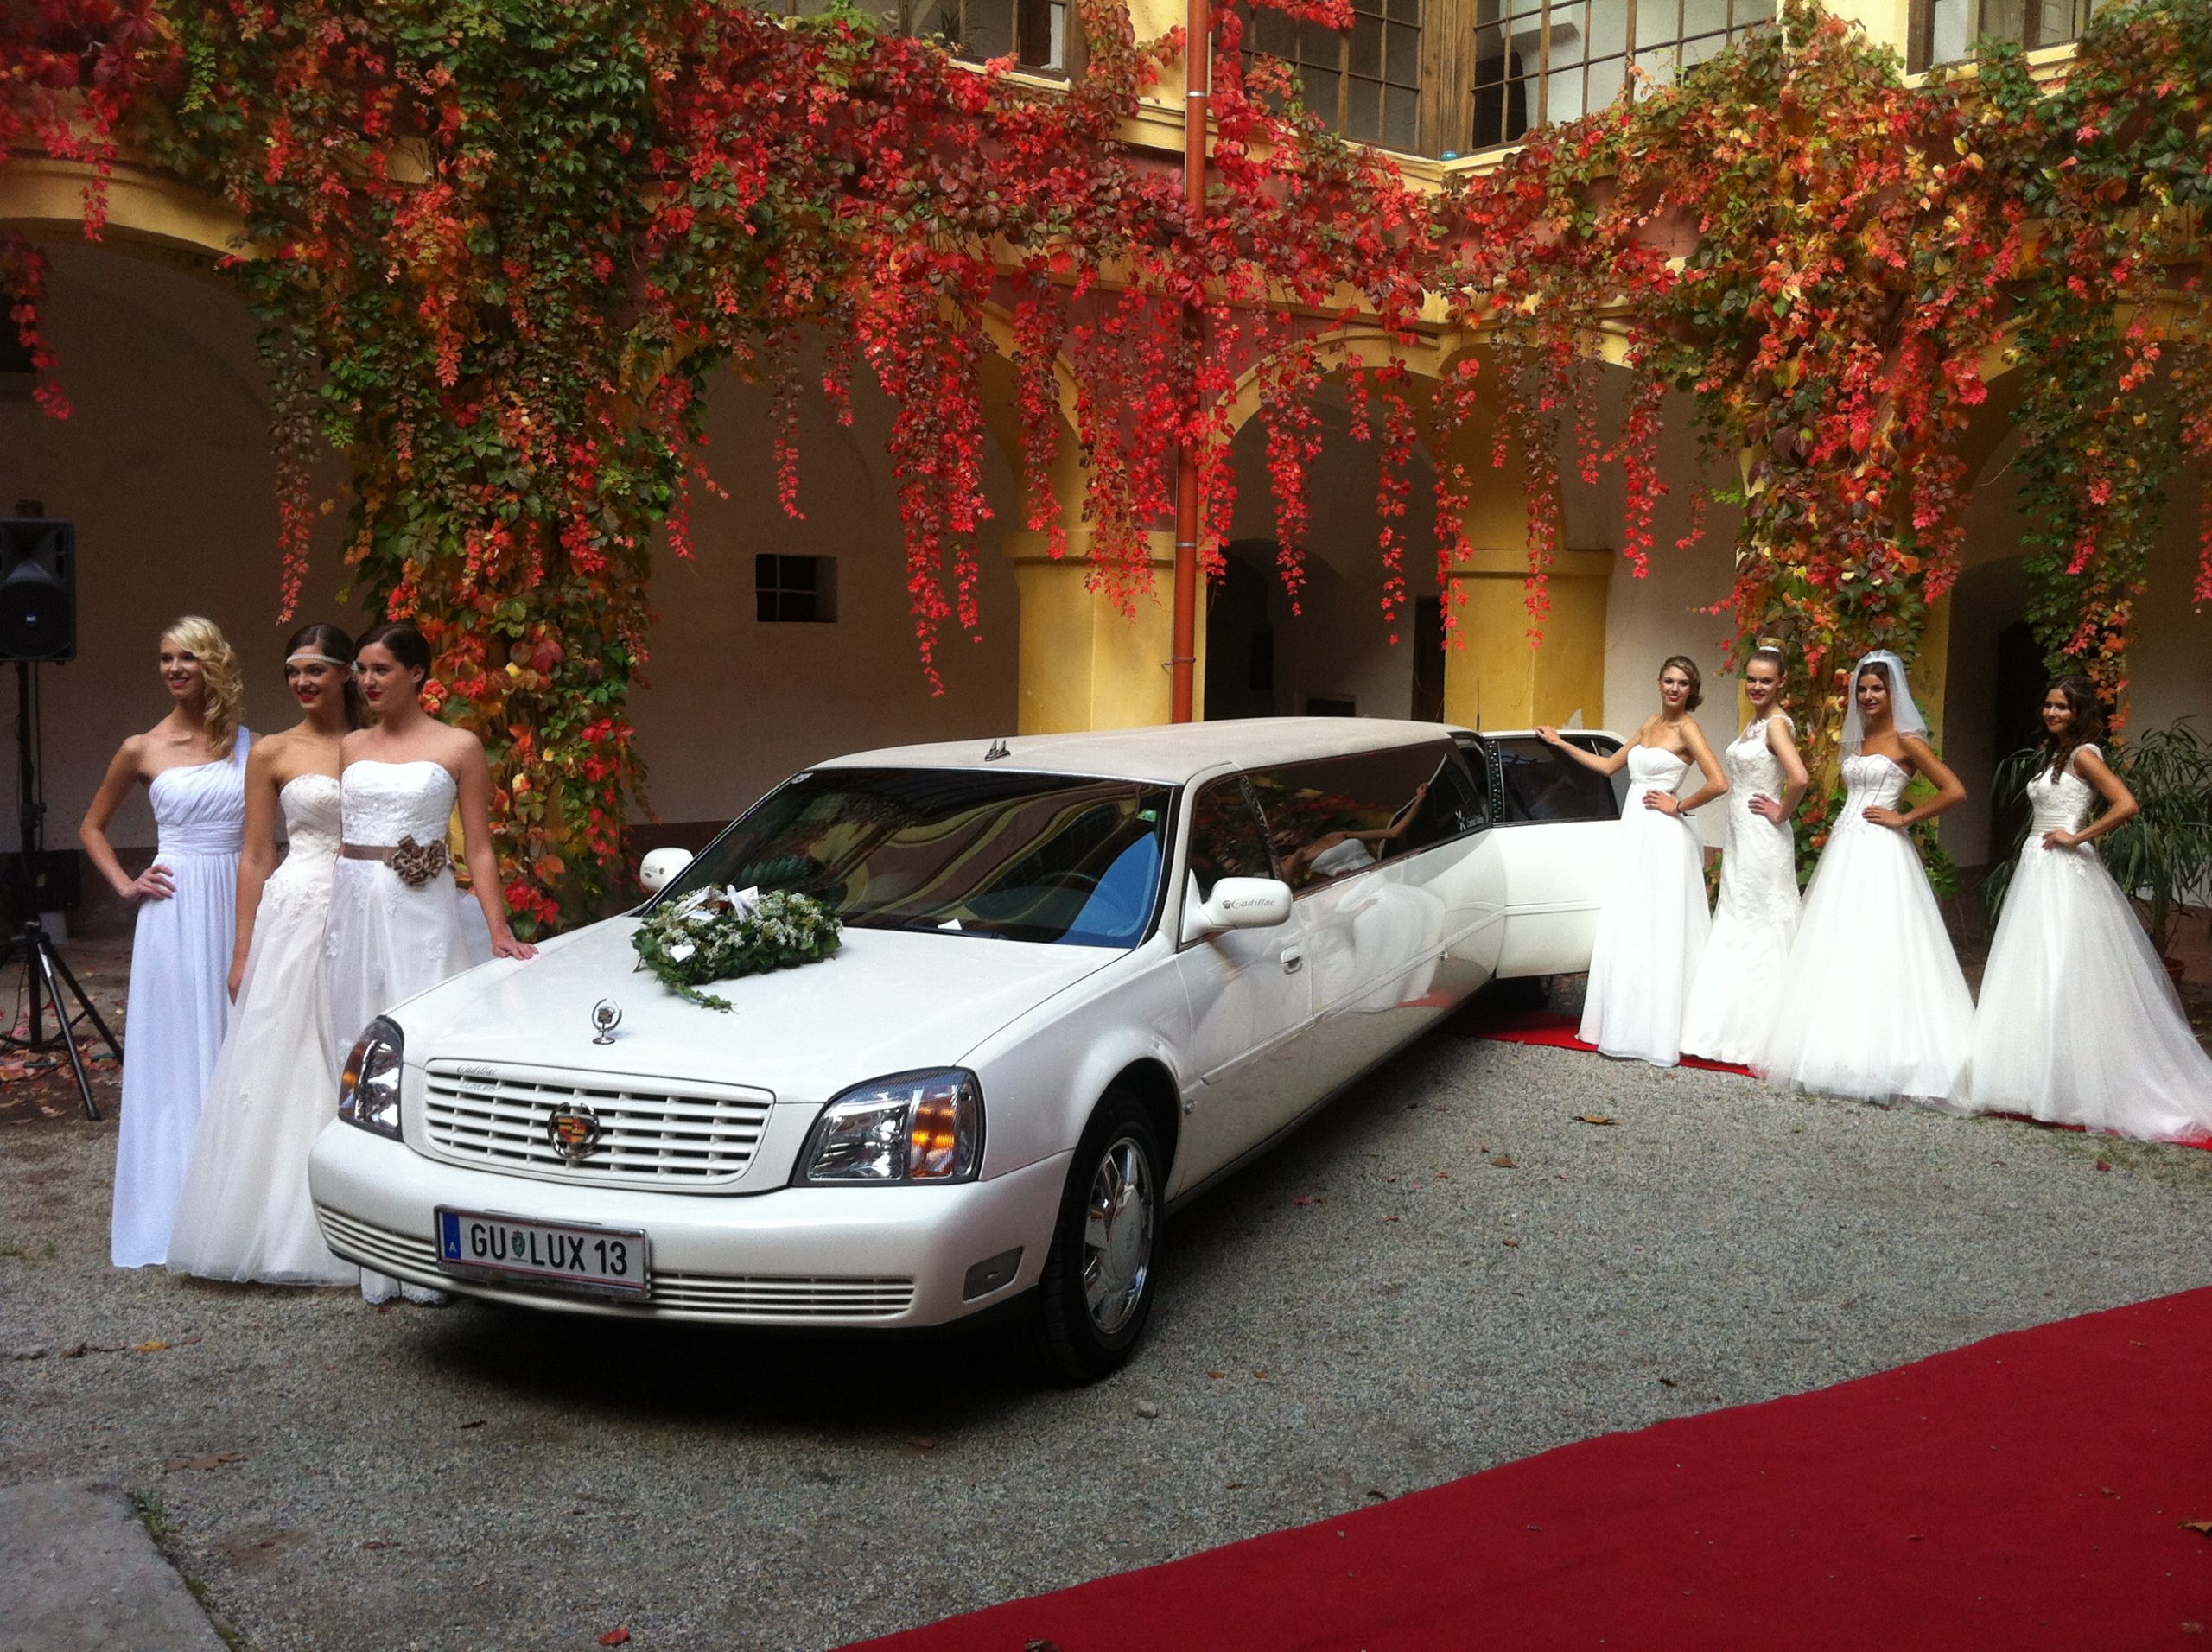 Luxury_limo_service_Startaxi_Stars_Taxi_luxus_maybach_mercedes_fabre_agentur_events6_graz_austria_steiermark